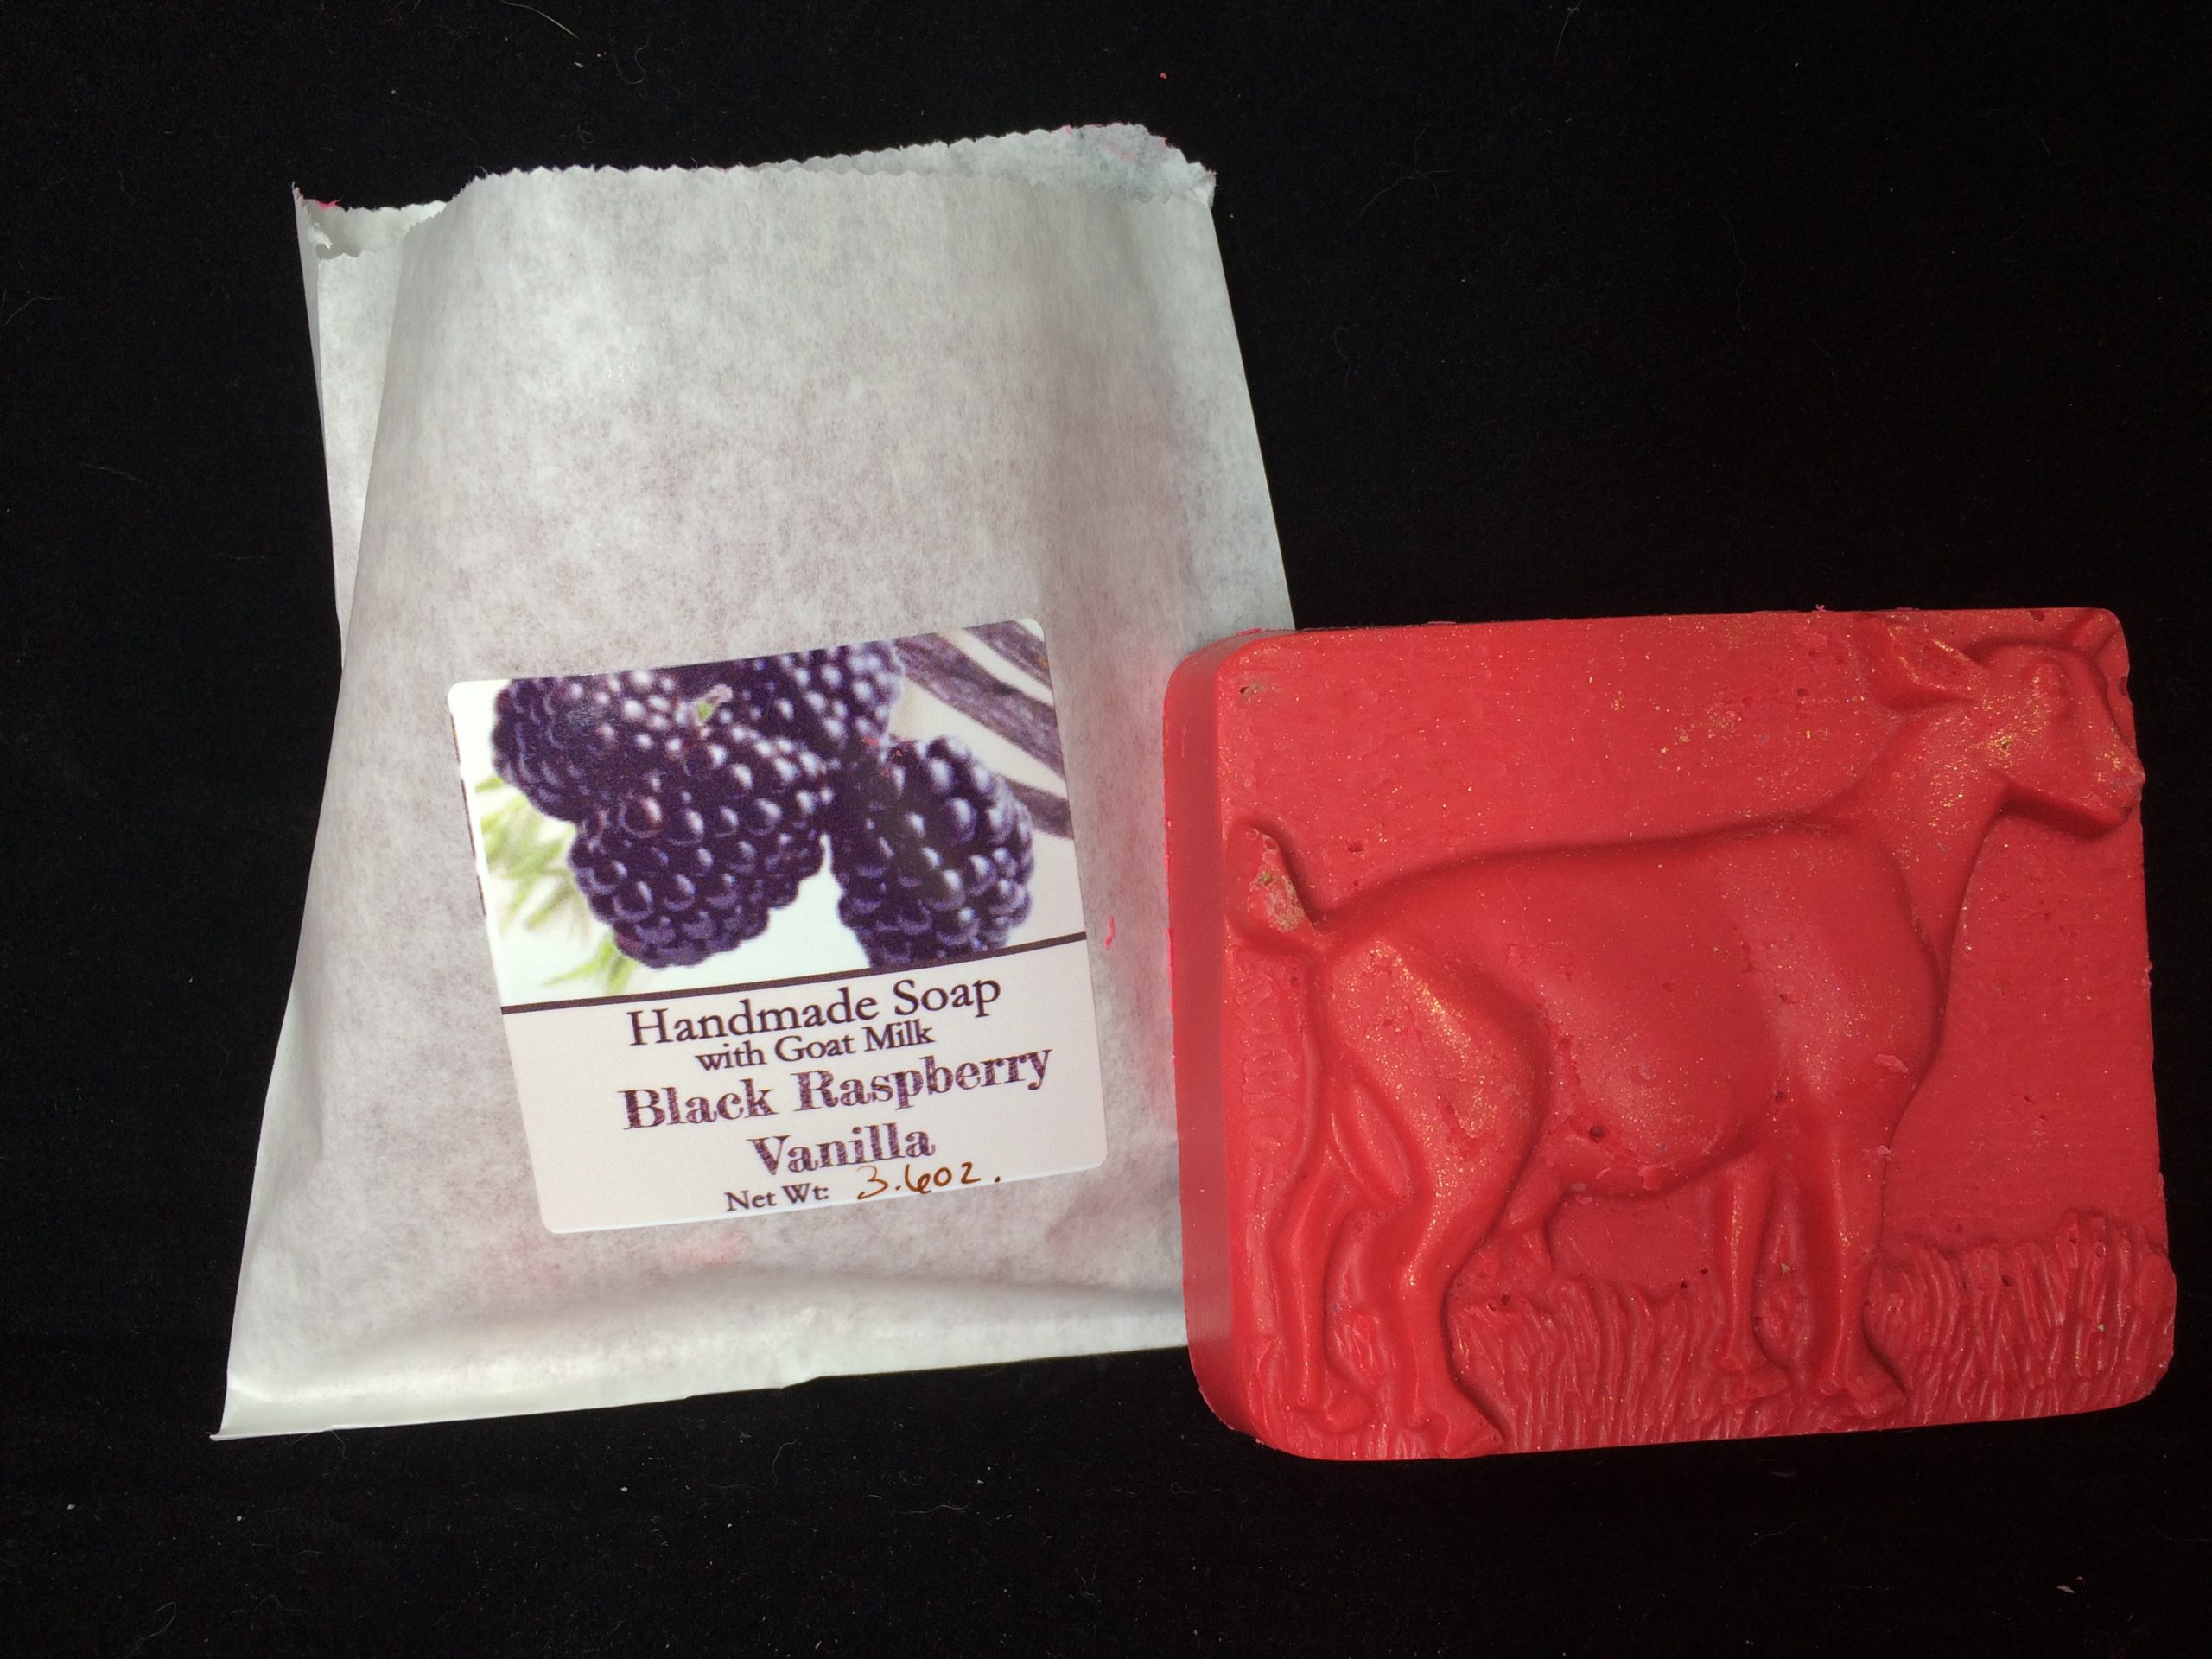 Goat molded black raspberry vanilla soap